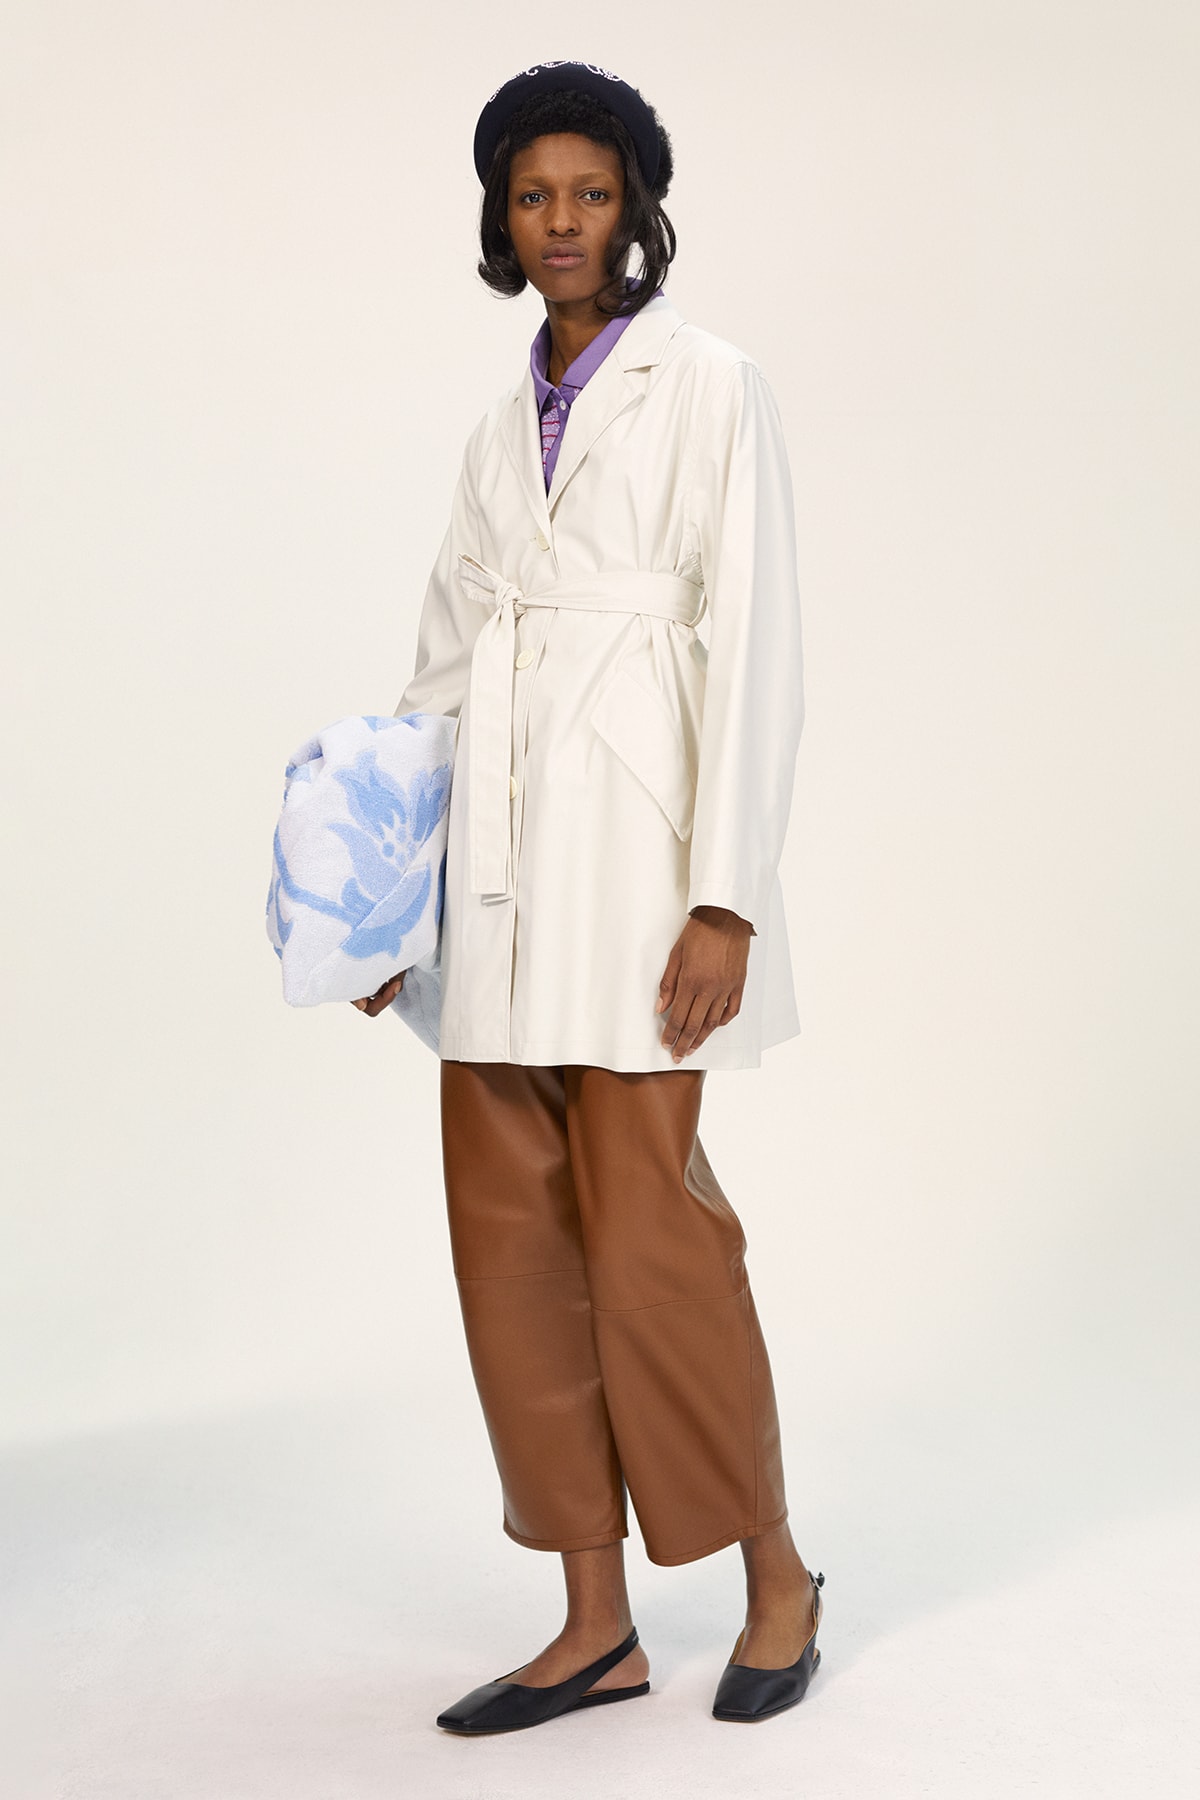 MM6 Maison Margiela Spring/Summer 2020 Collection Lookbook Wrap Coat Leather Pants